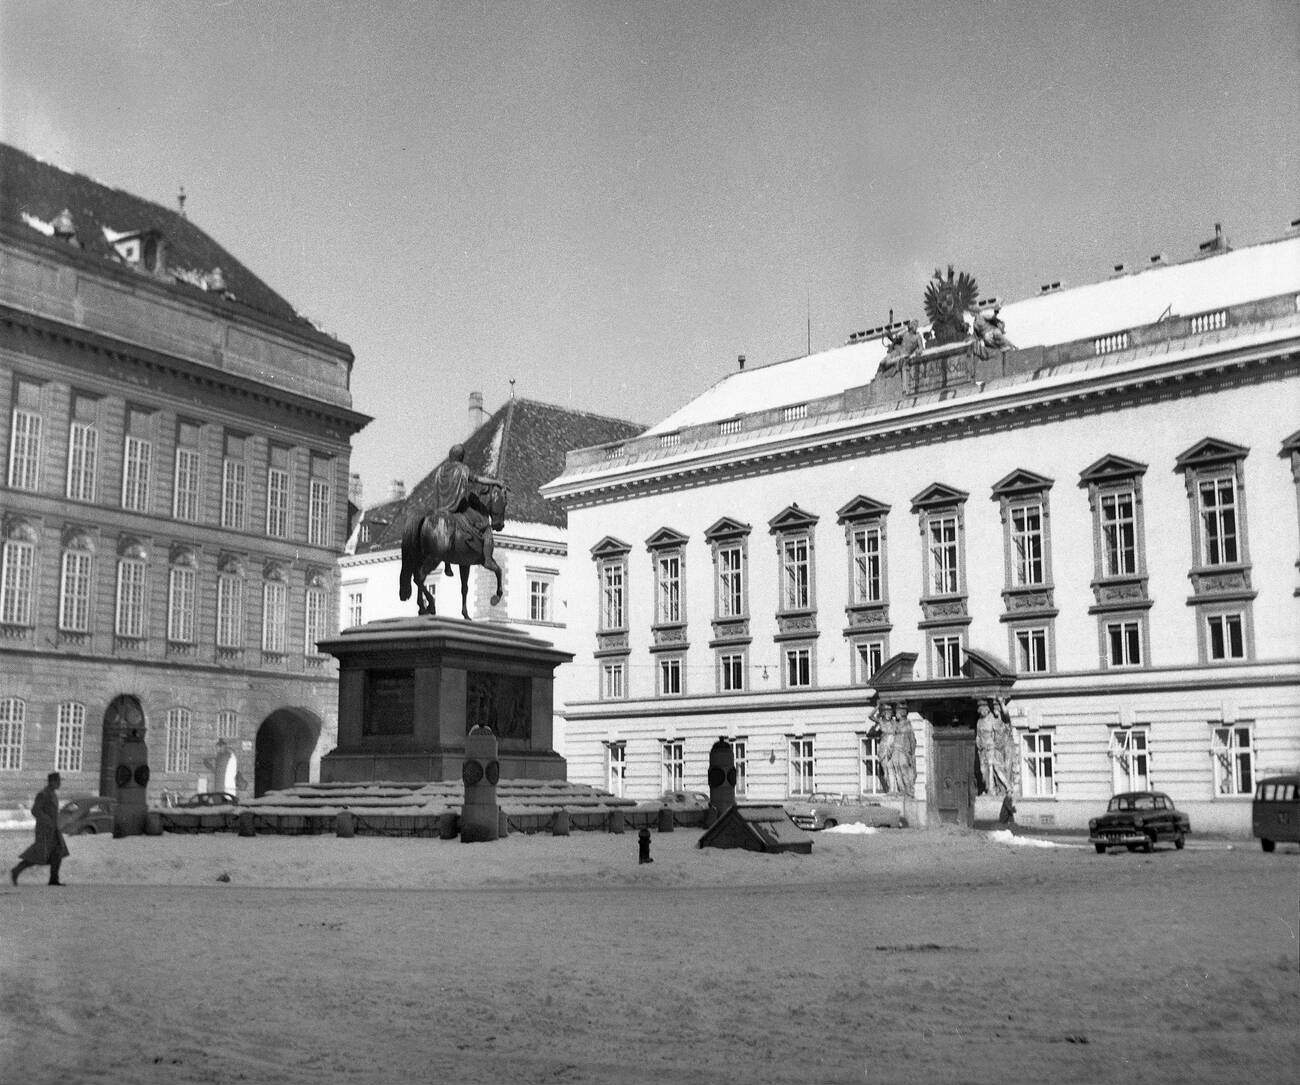 Equestrian statue of Joseph II in Josefsplatz Square, Vienna, Austria, 1956.